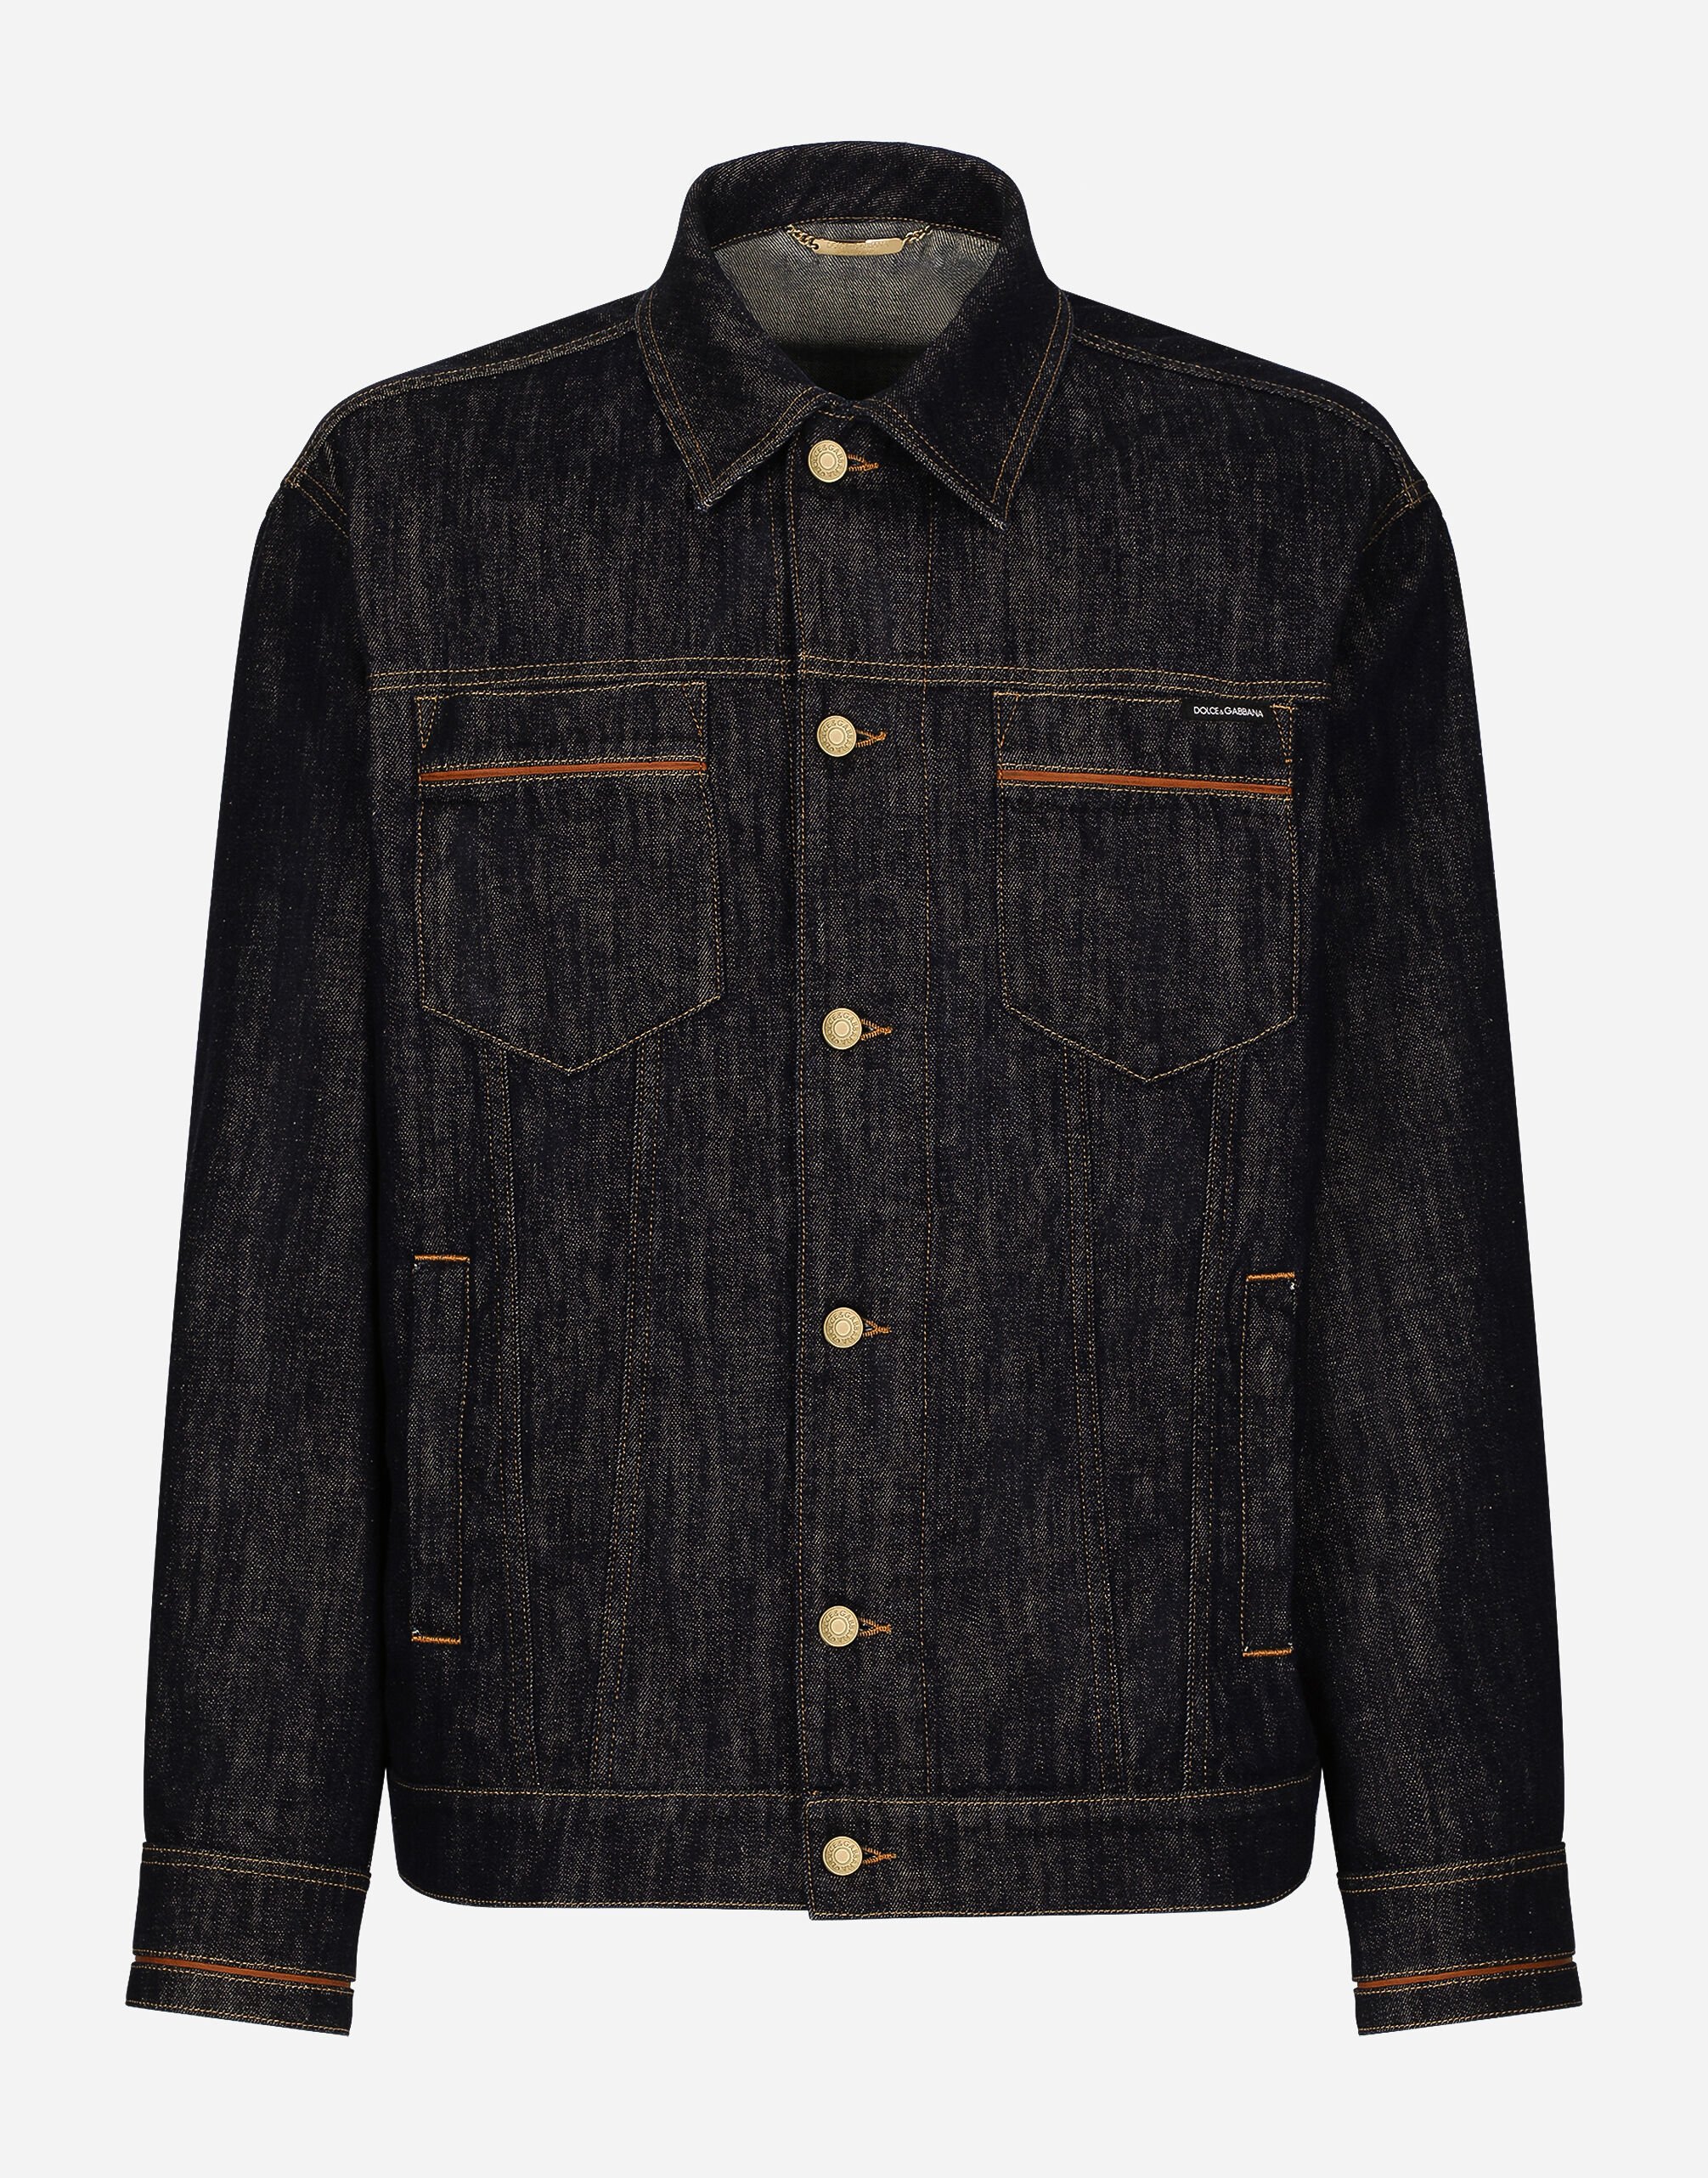 Dolce & Gabbana Denim jacket with leather inserts Black GW5OHTFUFMF